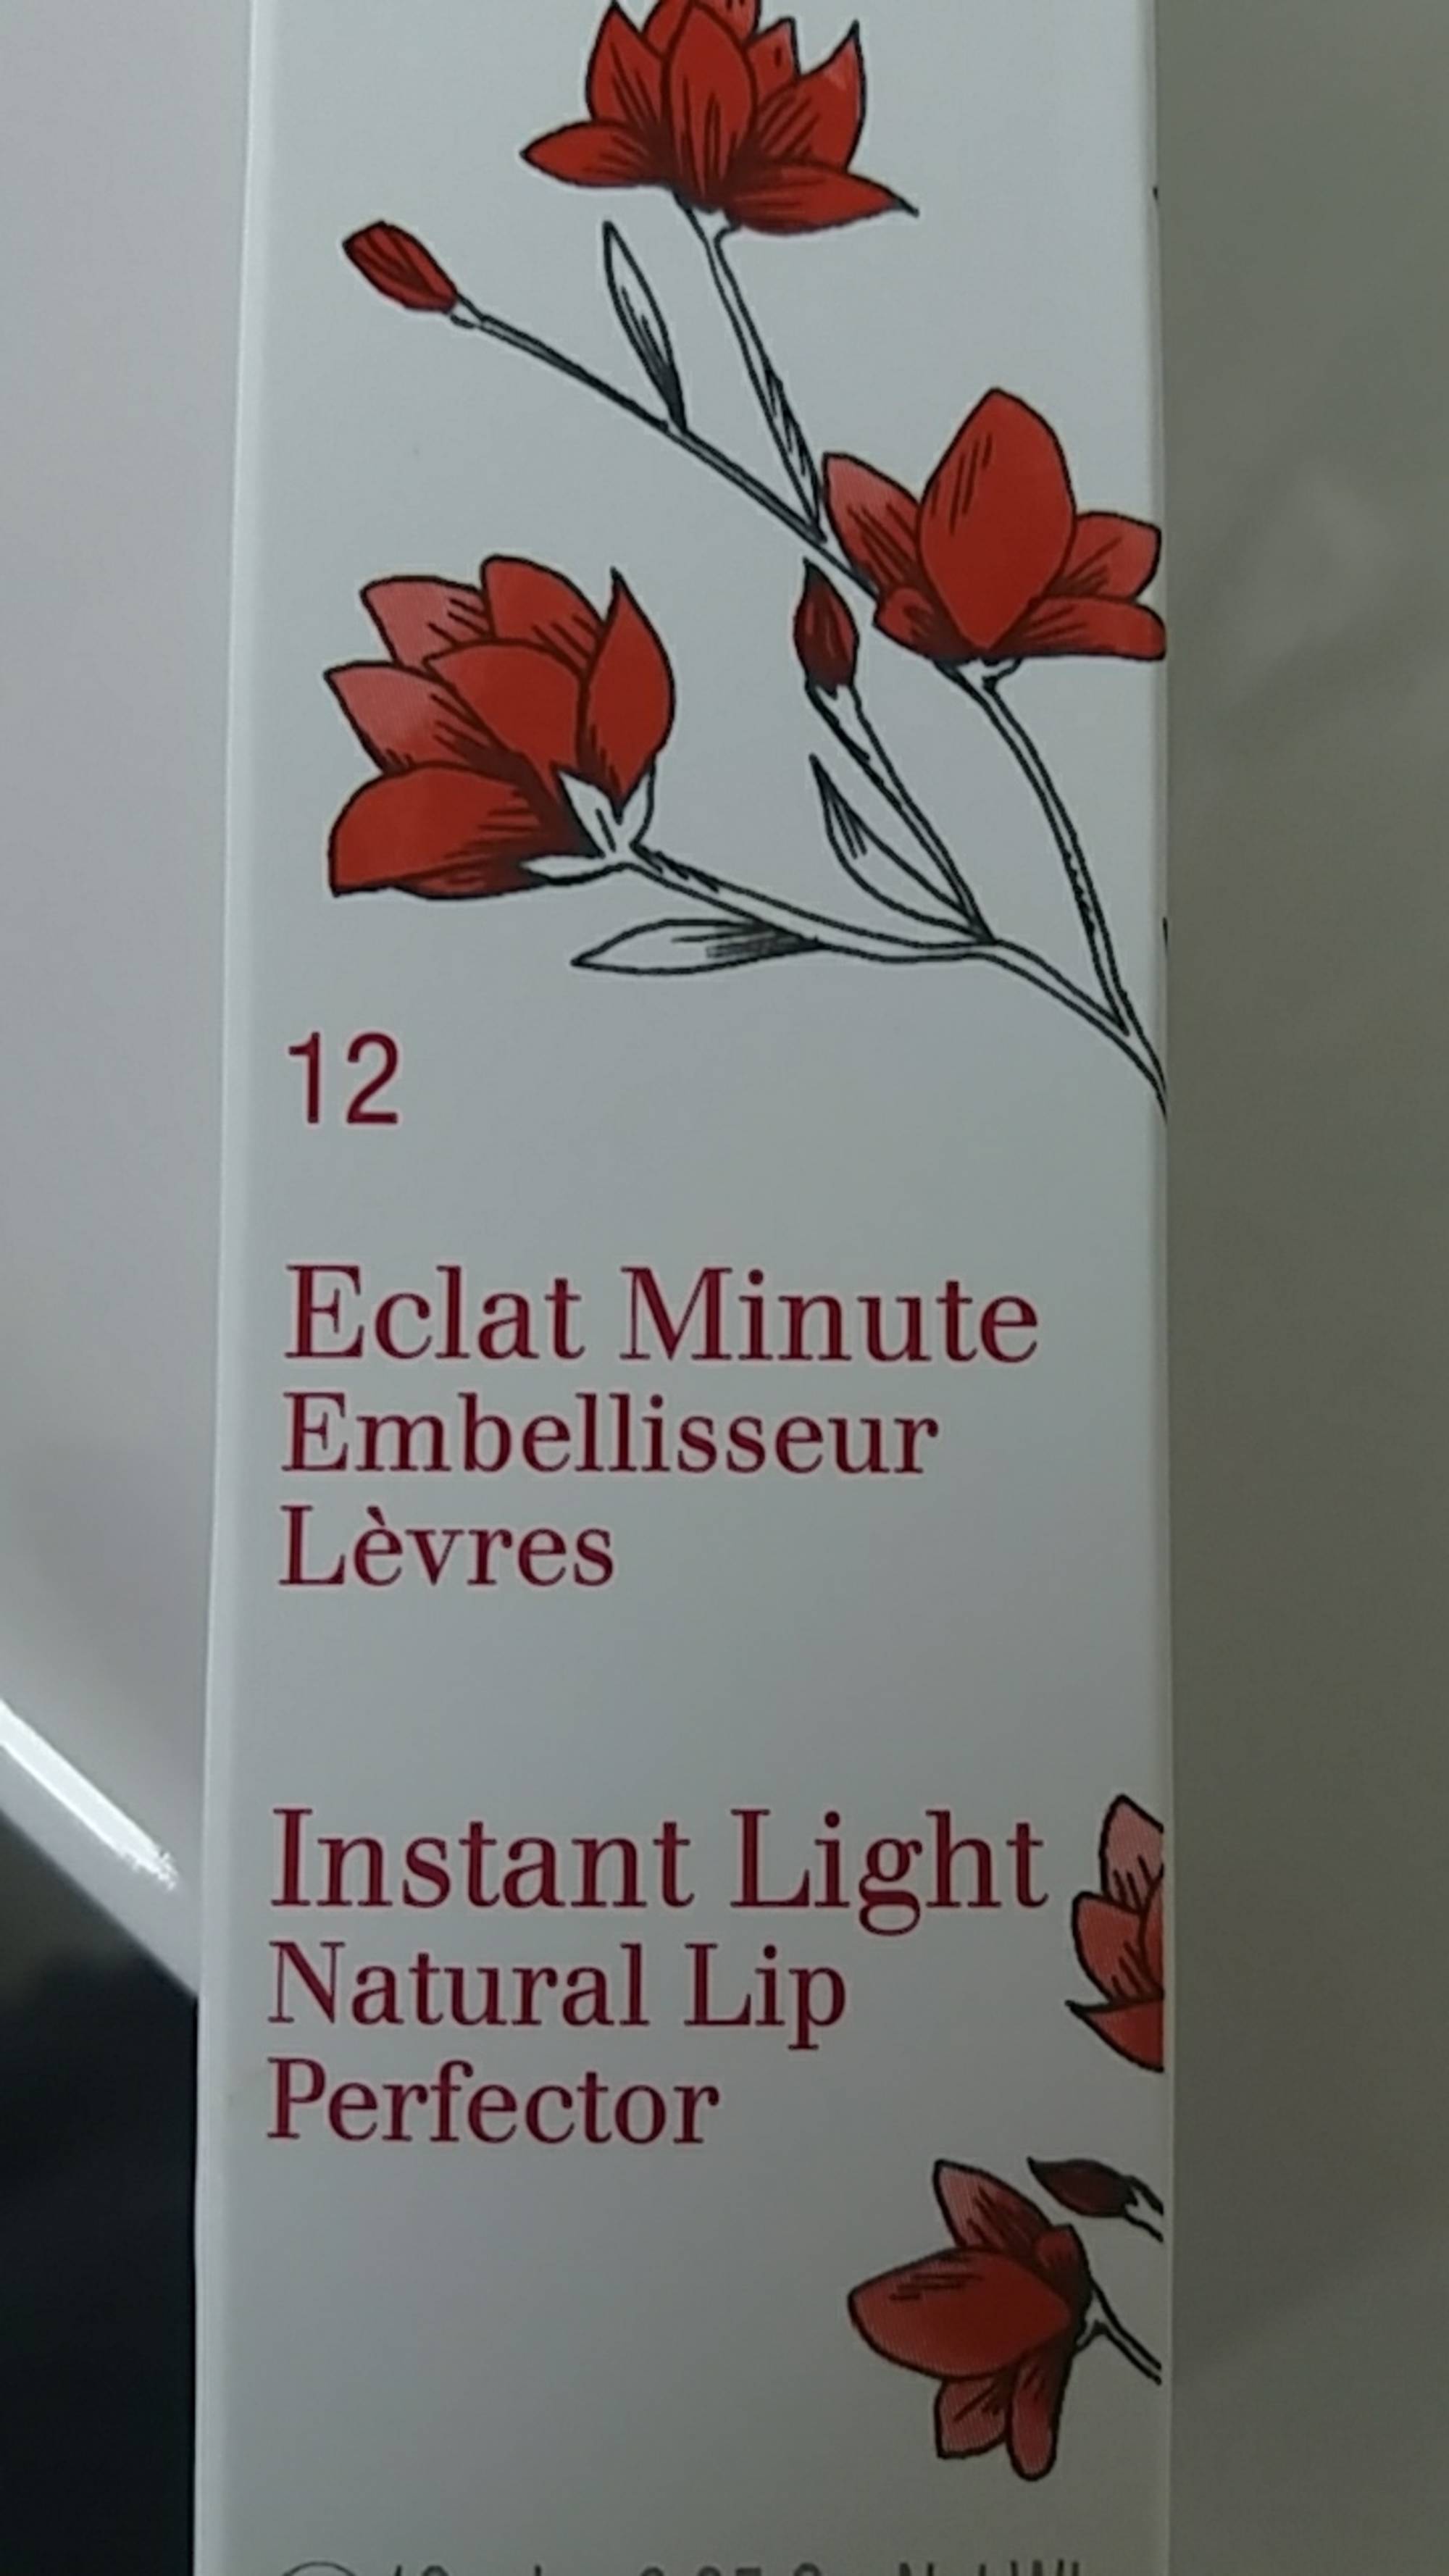 CLARINS - 12 Eclat minute - Embellisseur lèvres